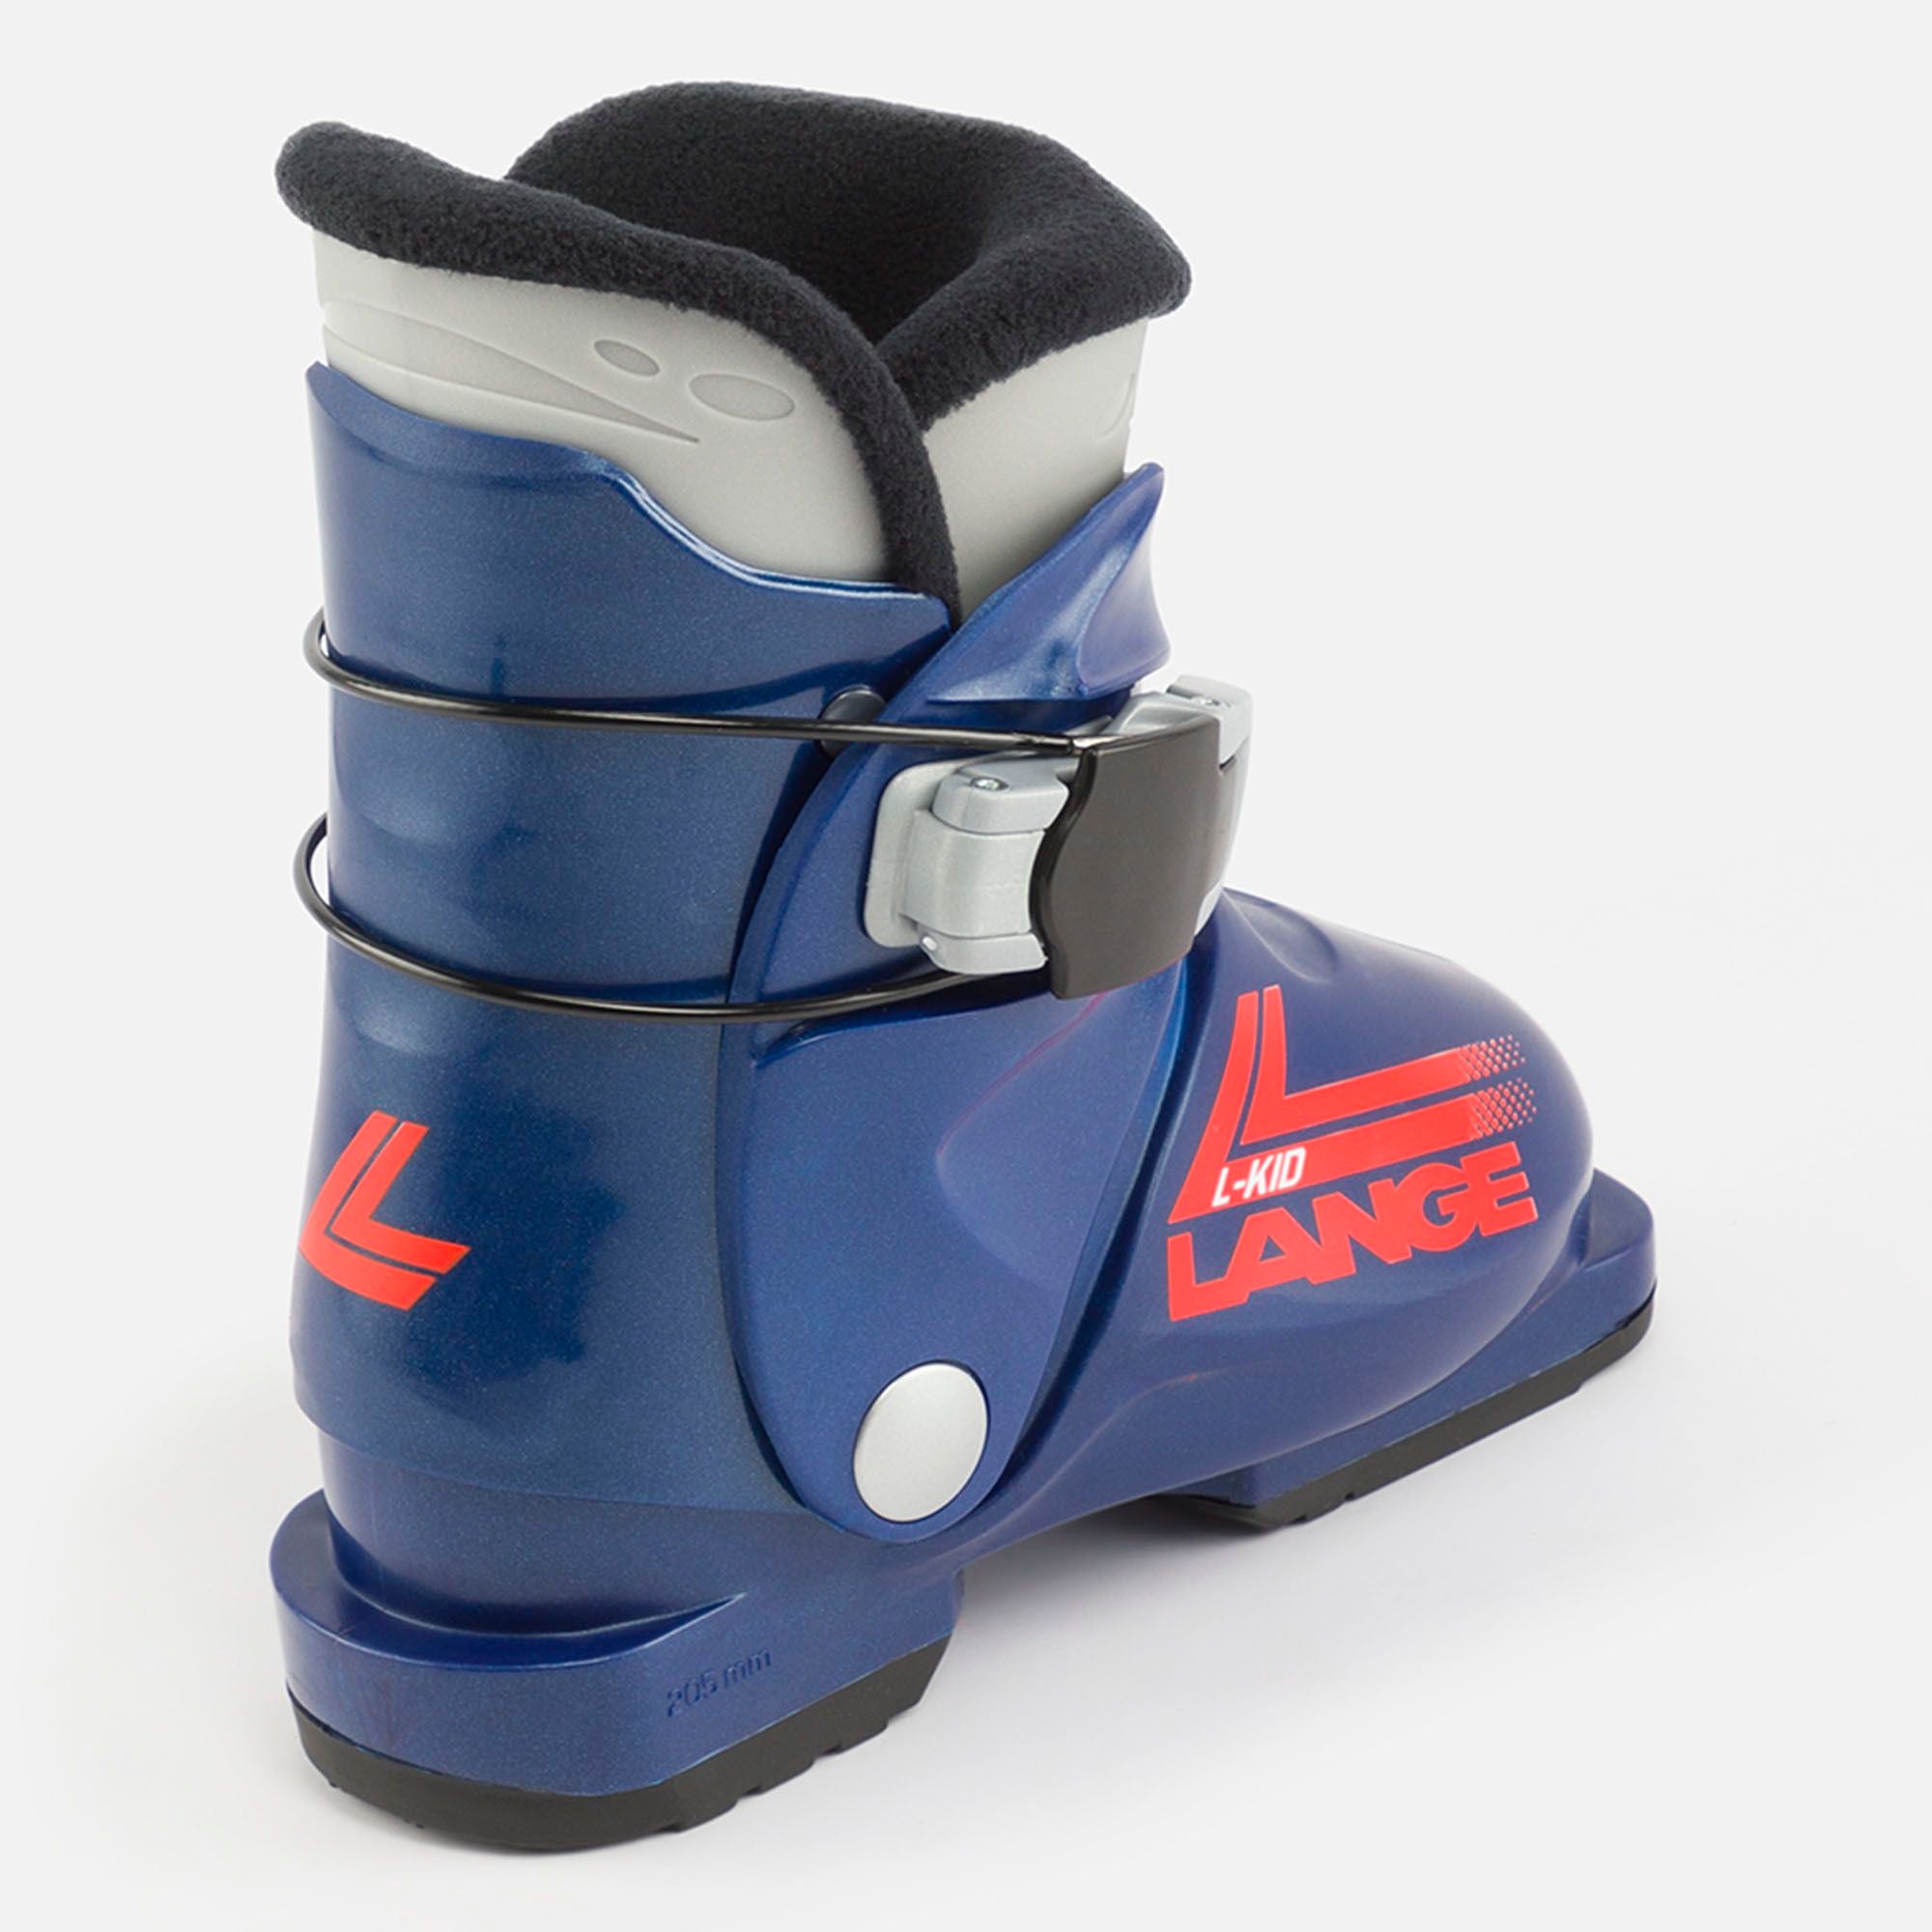 L Kid's Ski Boots